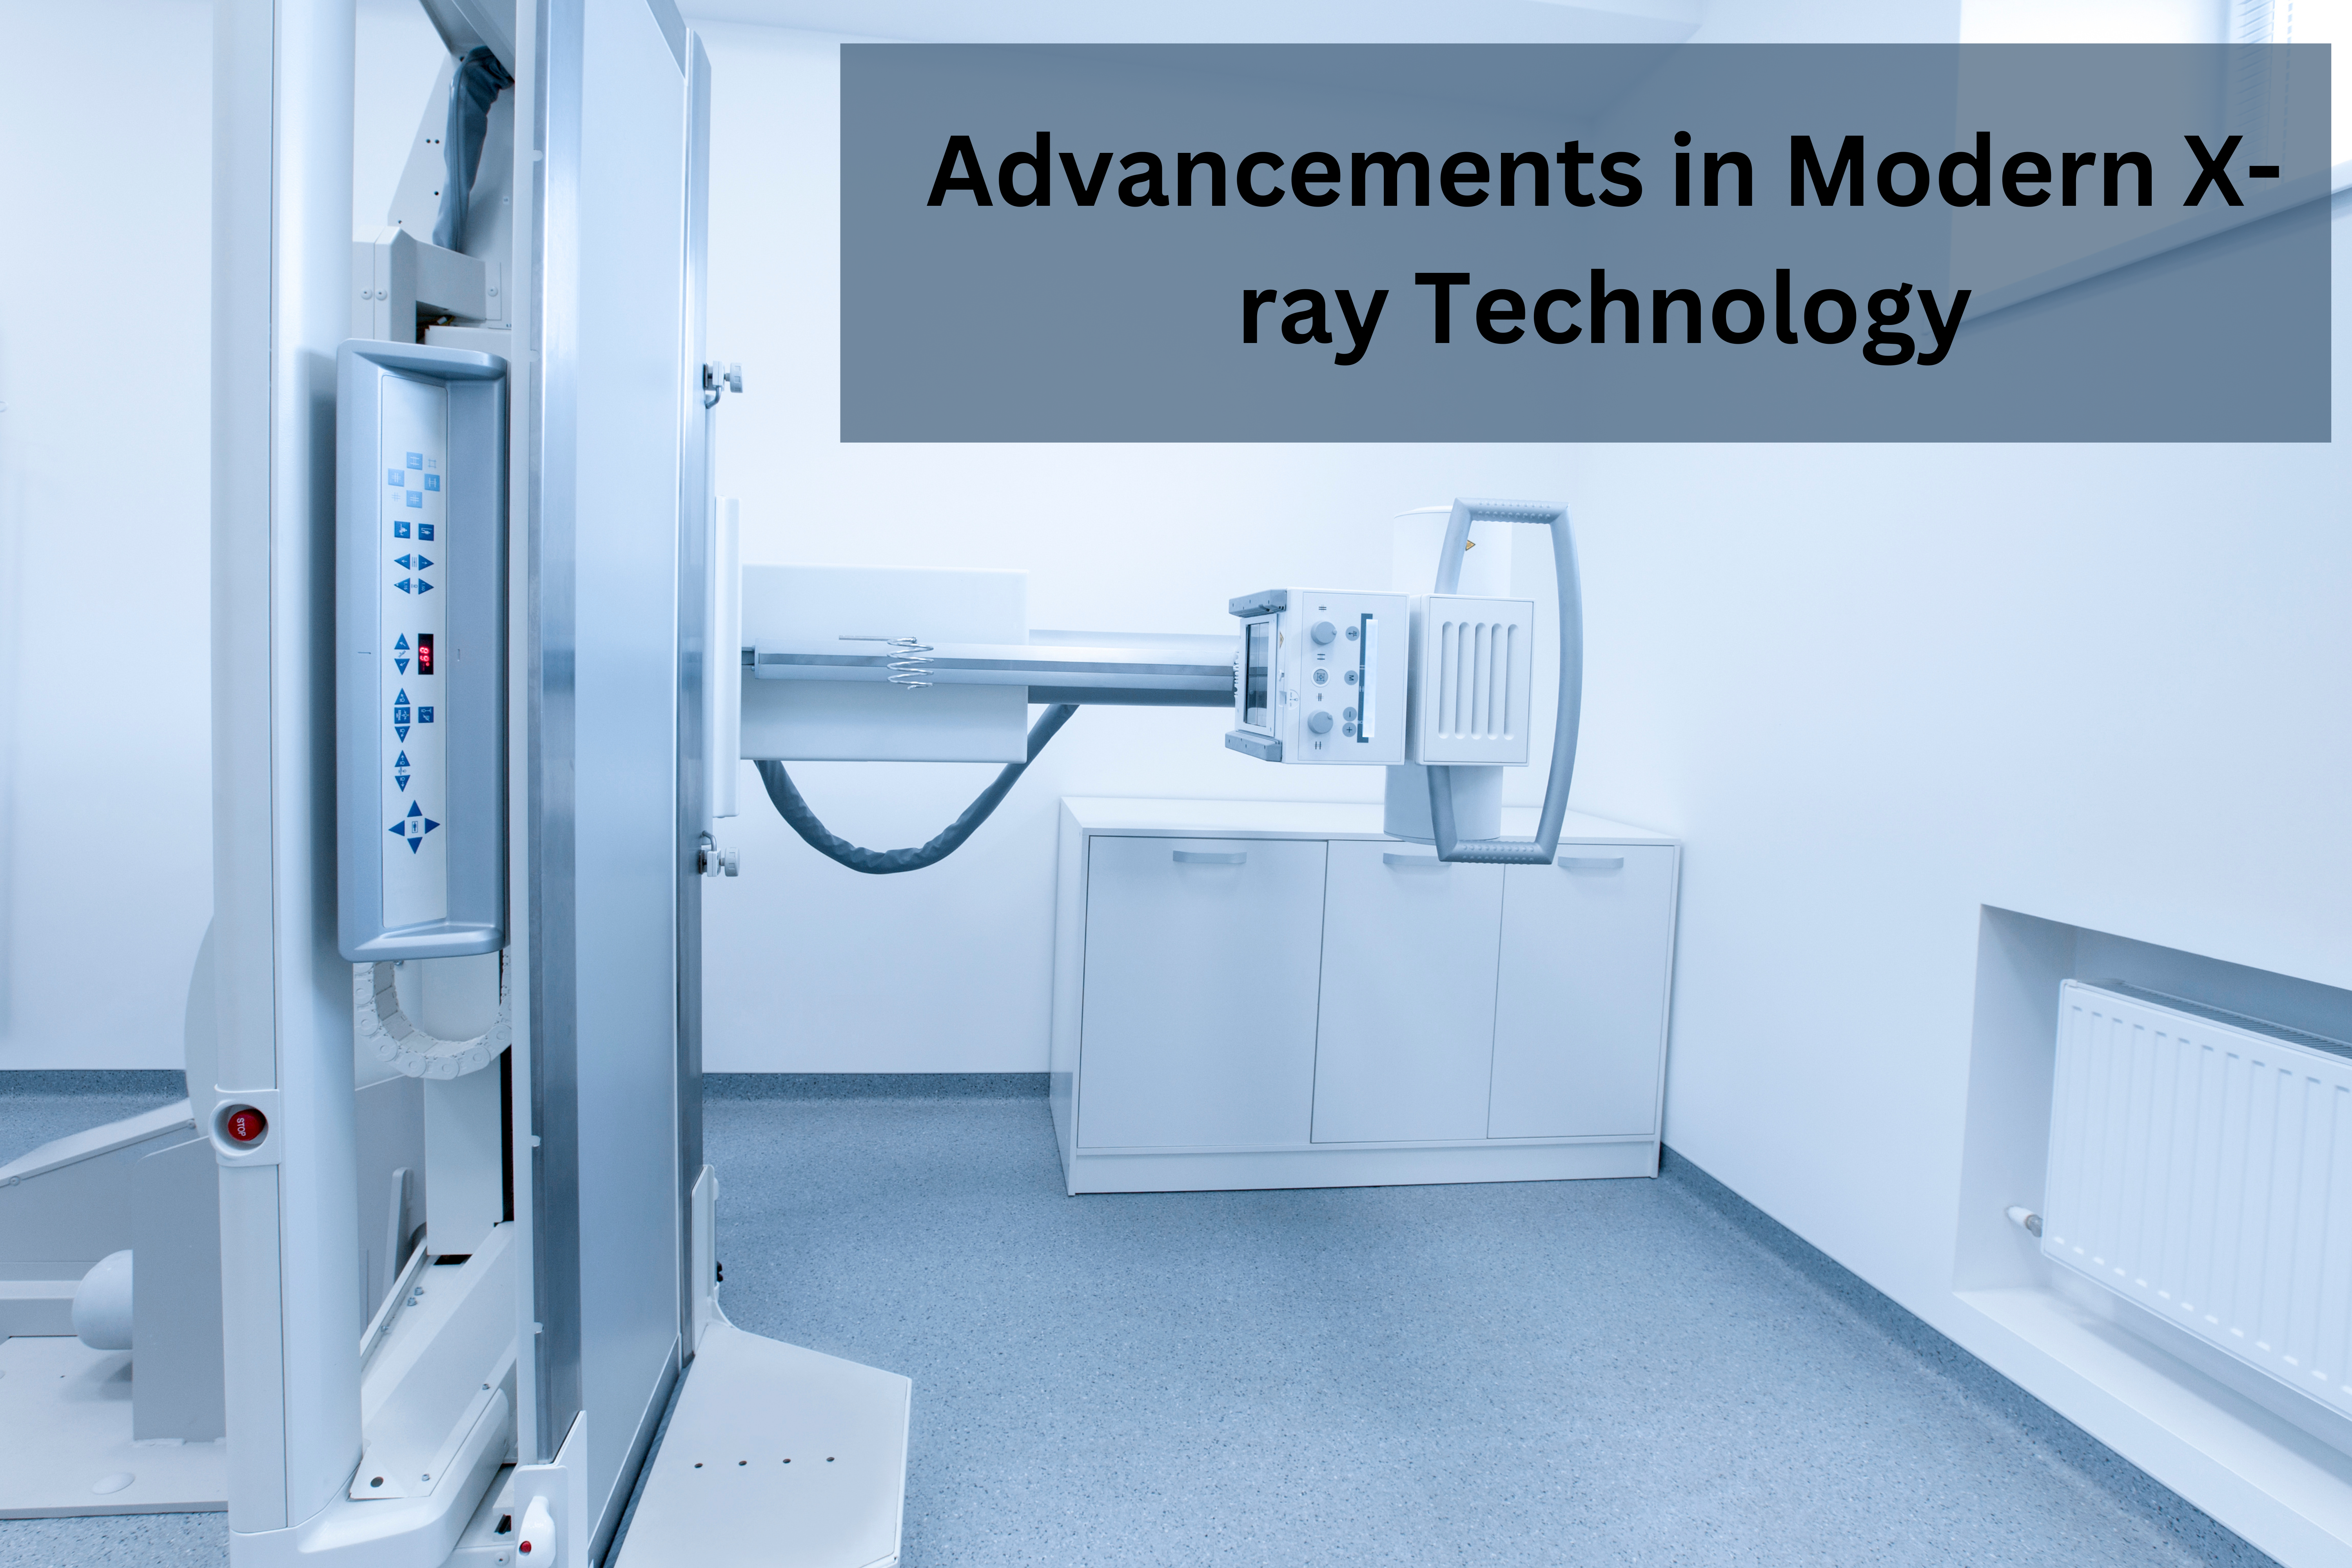 Modern X-ray Technology